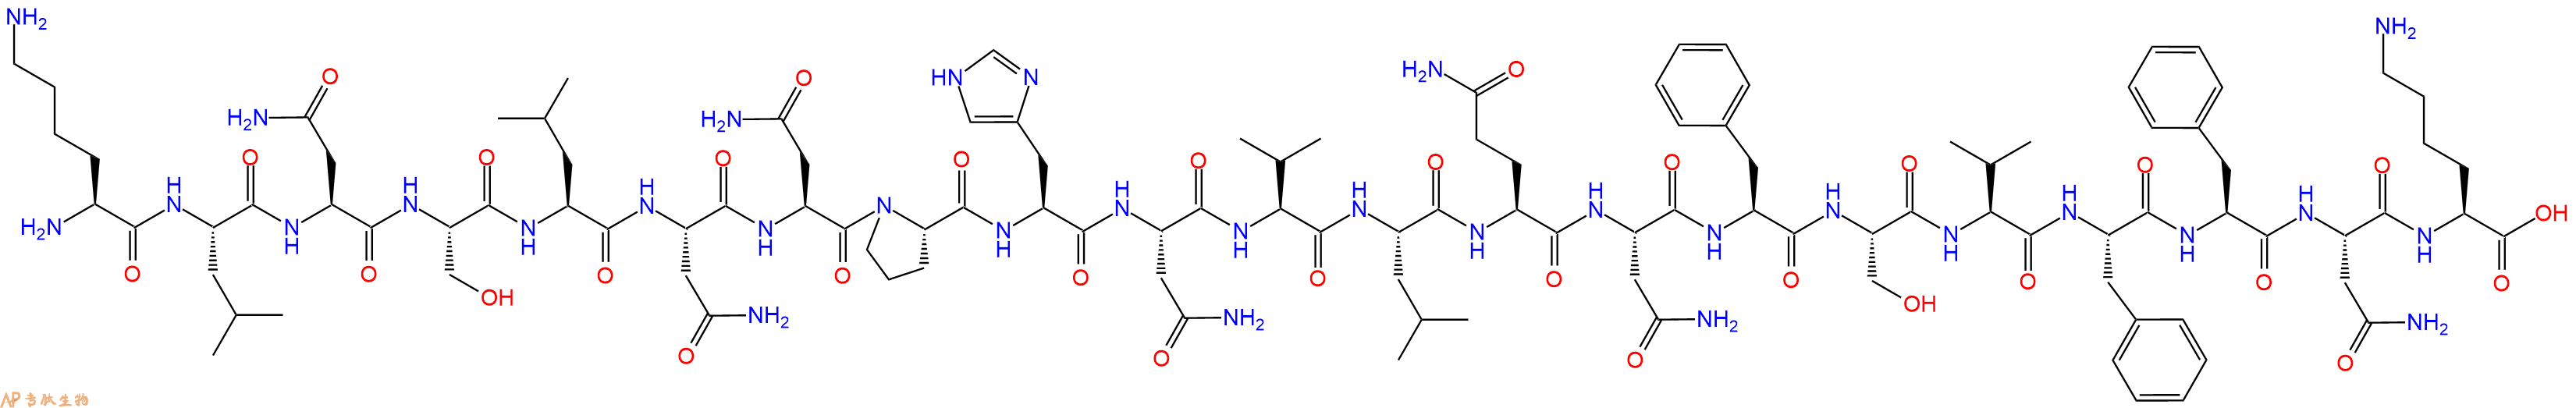 专肽生物产品MSP - 1 P3, Malaria Merozoite Surface Peptide - 1